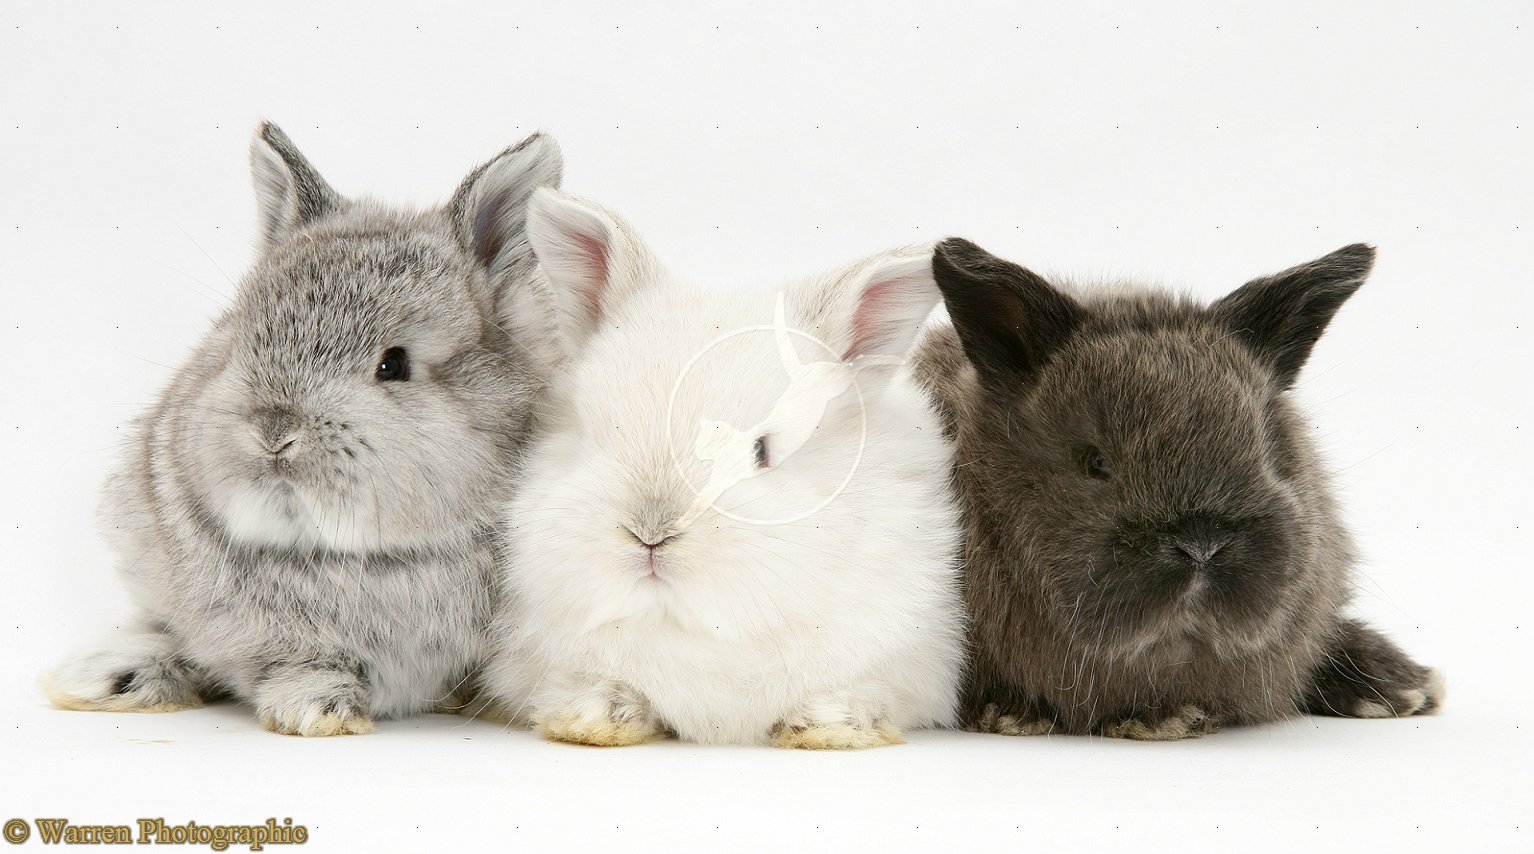 Cute Baby Bunnies Wallpaper Cute baby bunnies 11070 hd